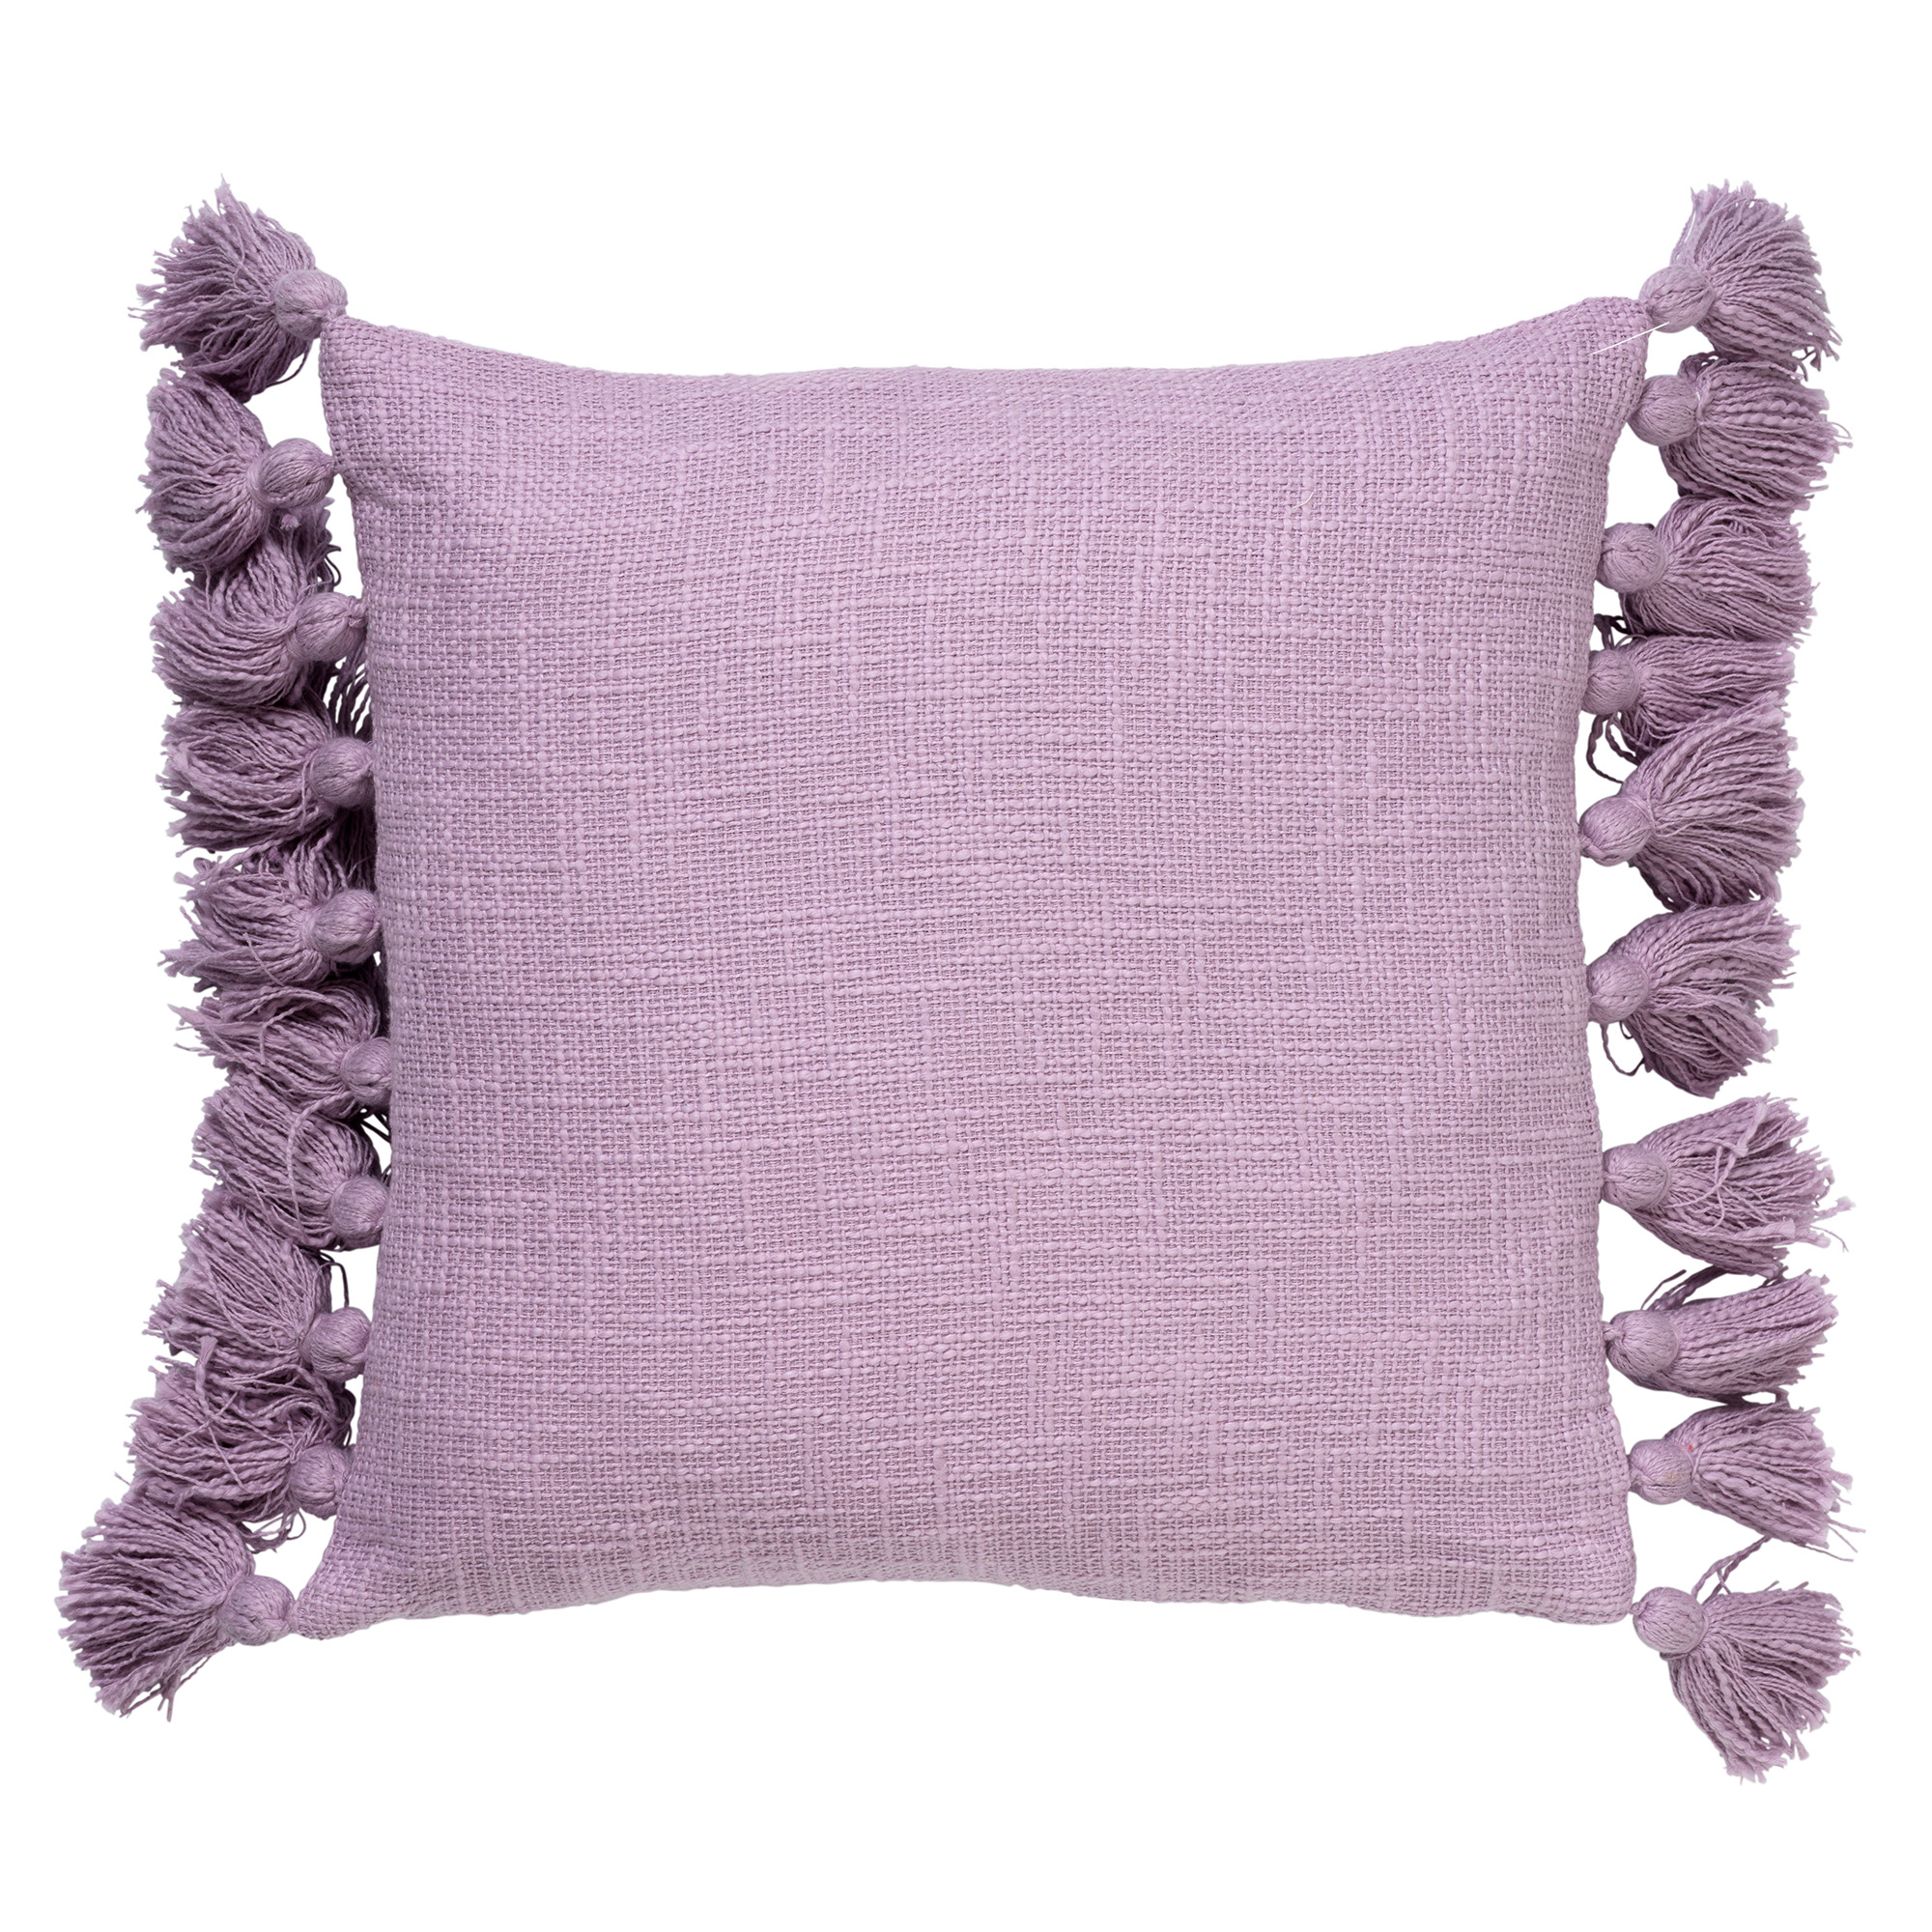 RUBY - Kussenhoes katoen 45x45 cm -  Lavender Frost - paars - pasteltint - met flosjes 